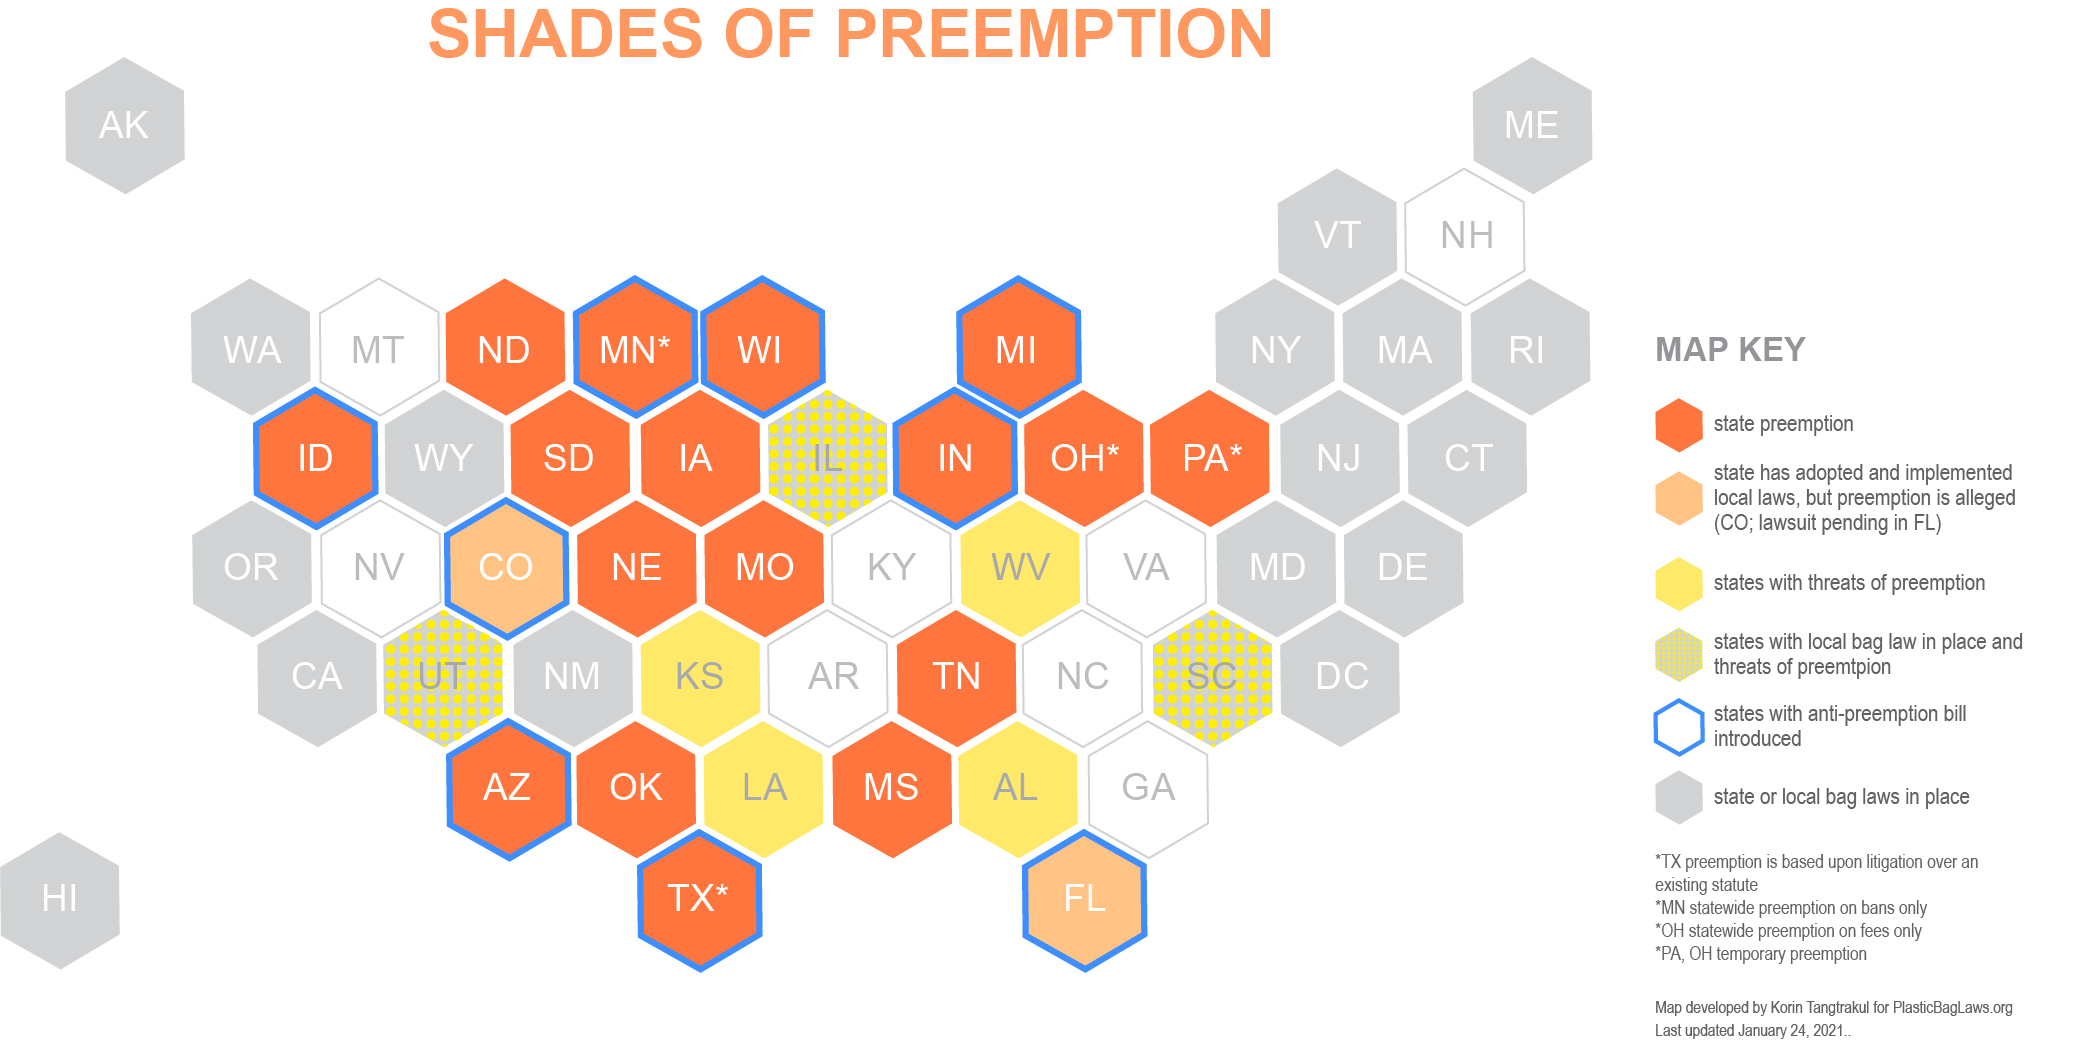 Shades of Preemption graphic